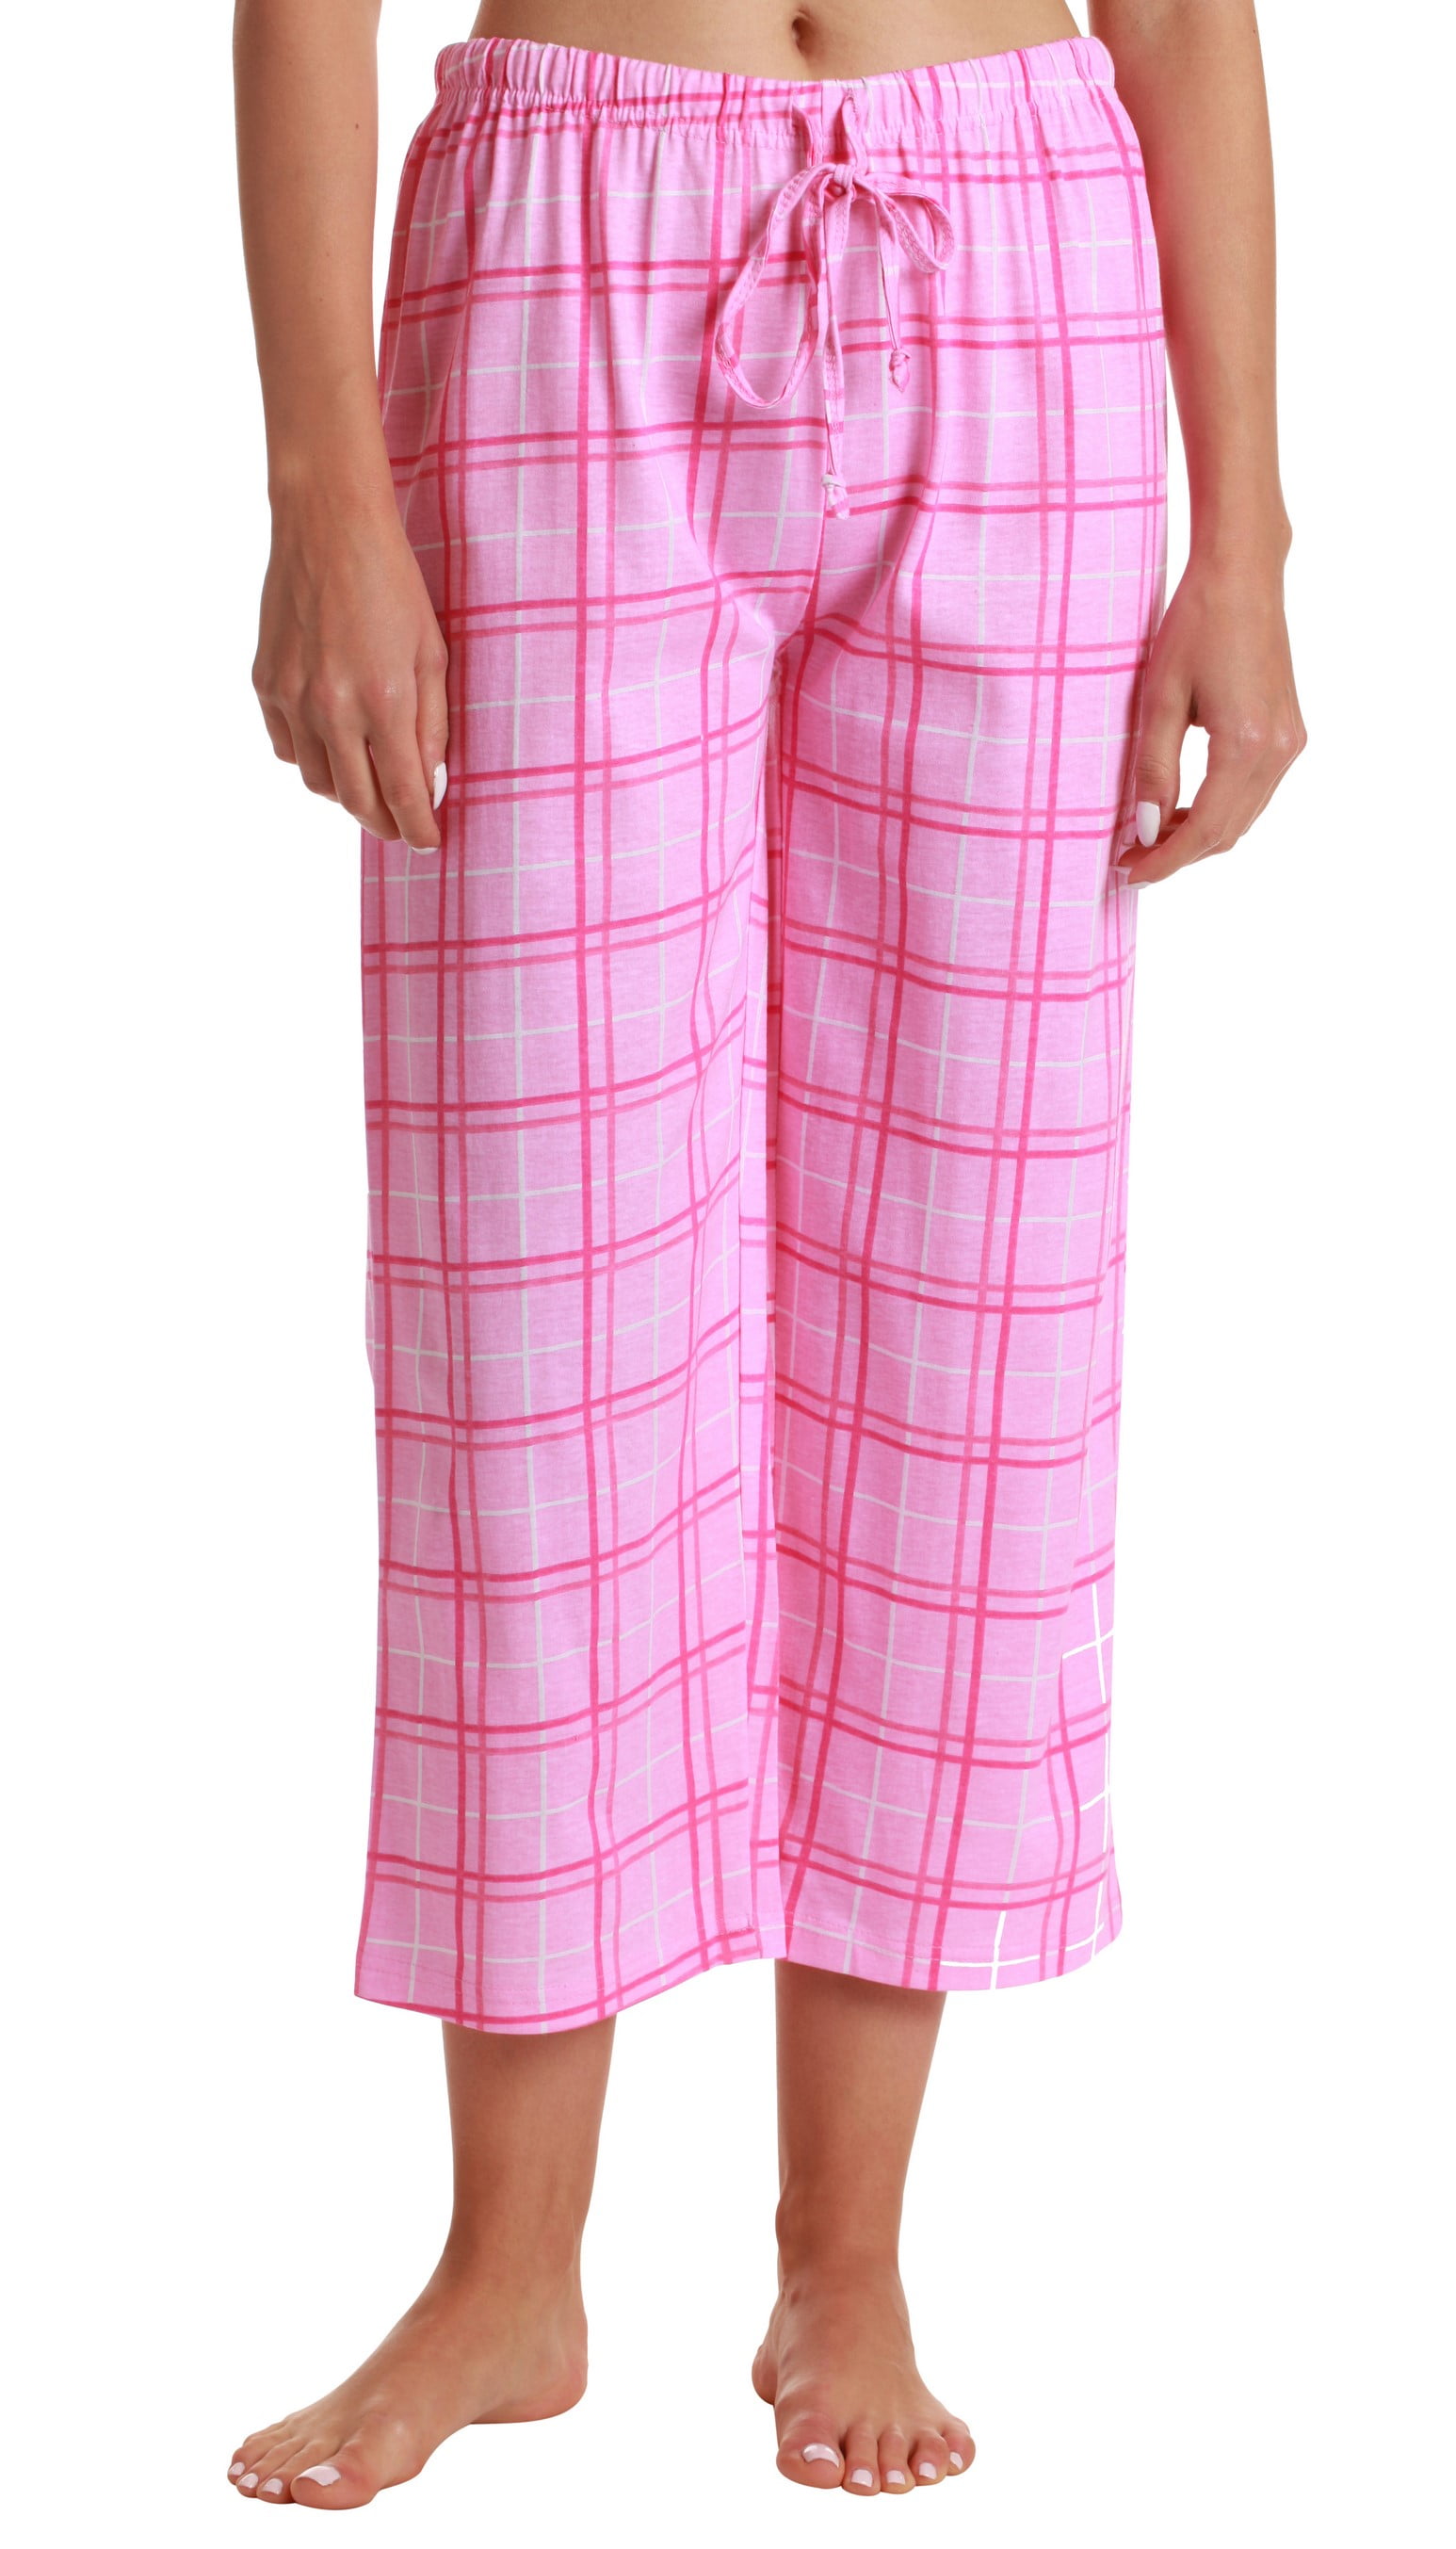 Just Love 100% Cotton Women's Capri Pajama Pants Sleepwear - Comfortable  and Stylish (Pink Plaid, Small) 